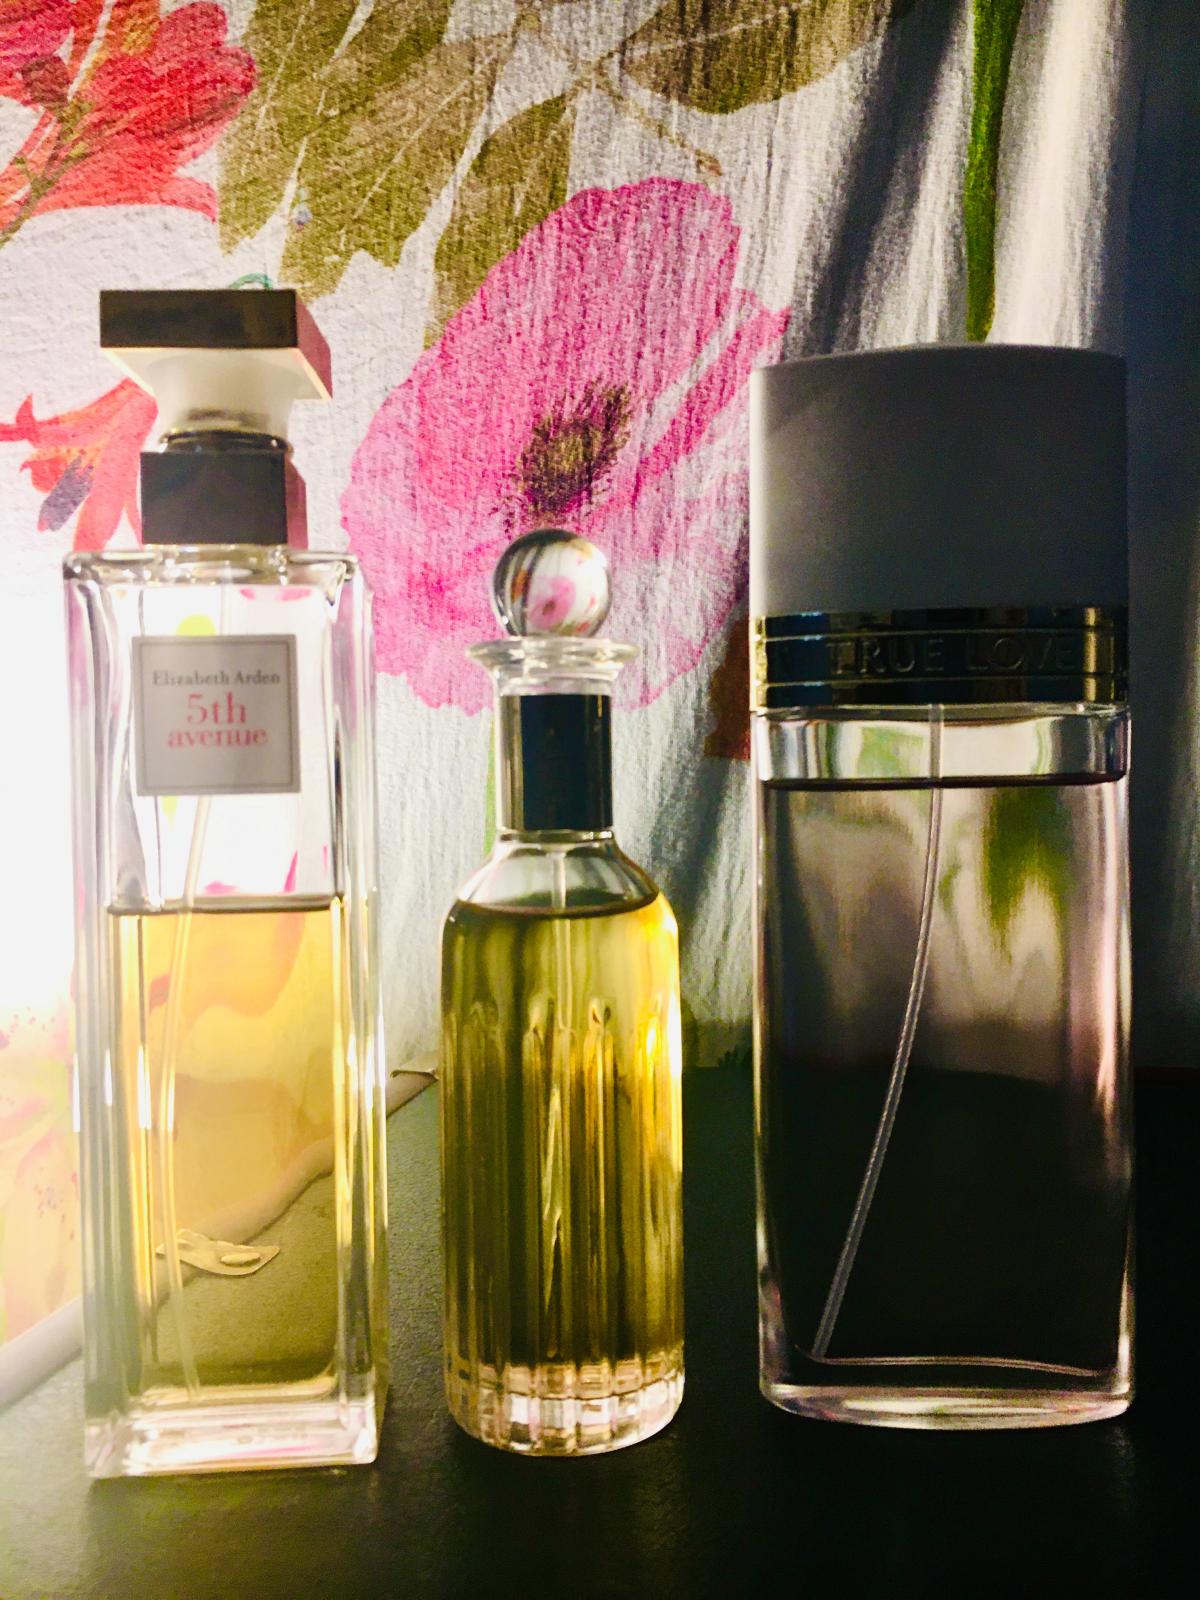 Splendor Elizabeth Arden perfume - a fragrance for women 1998